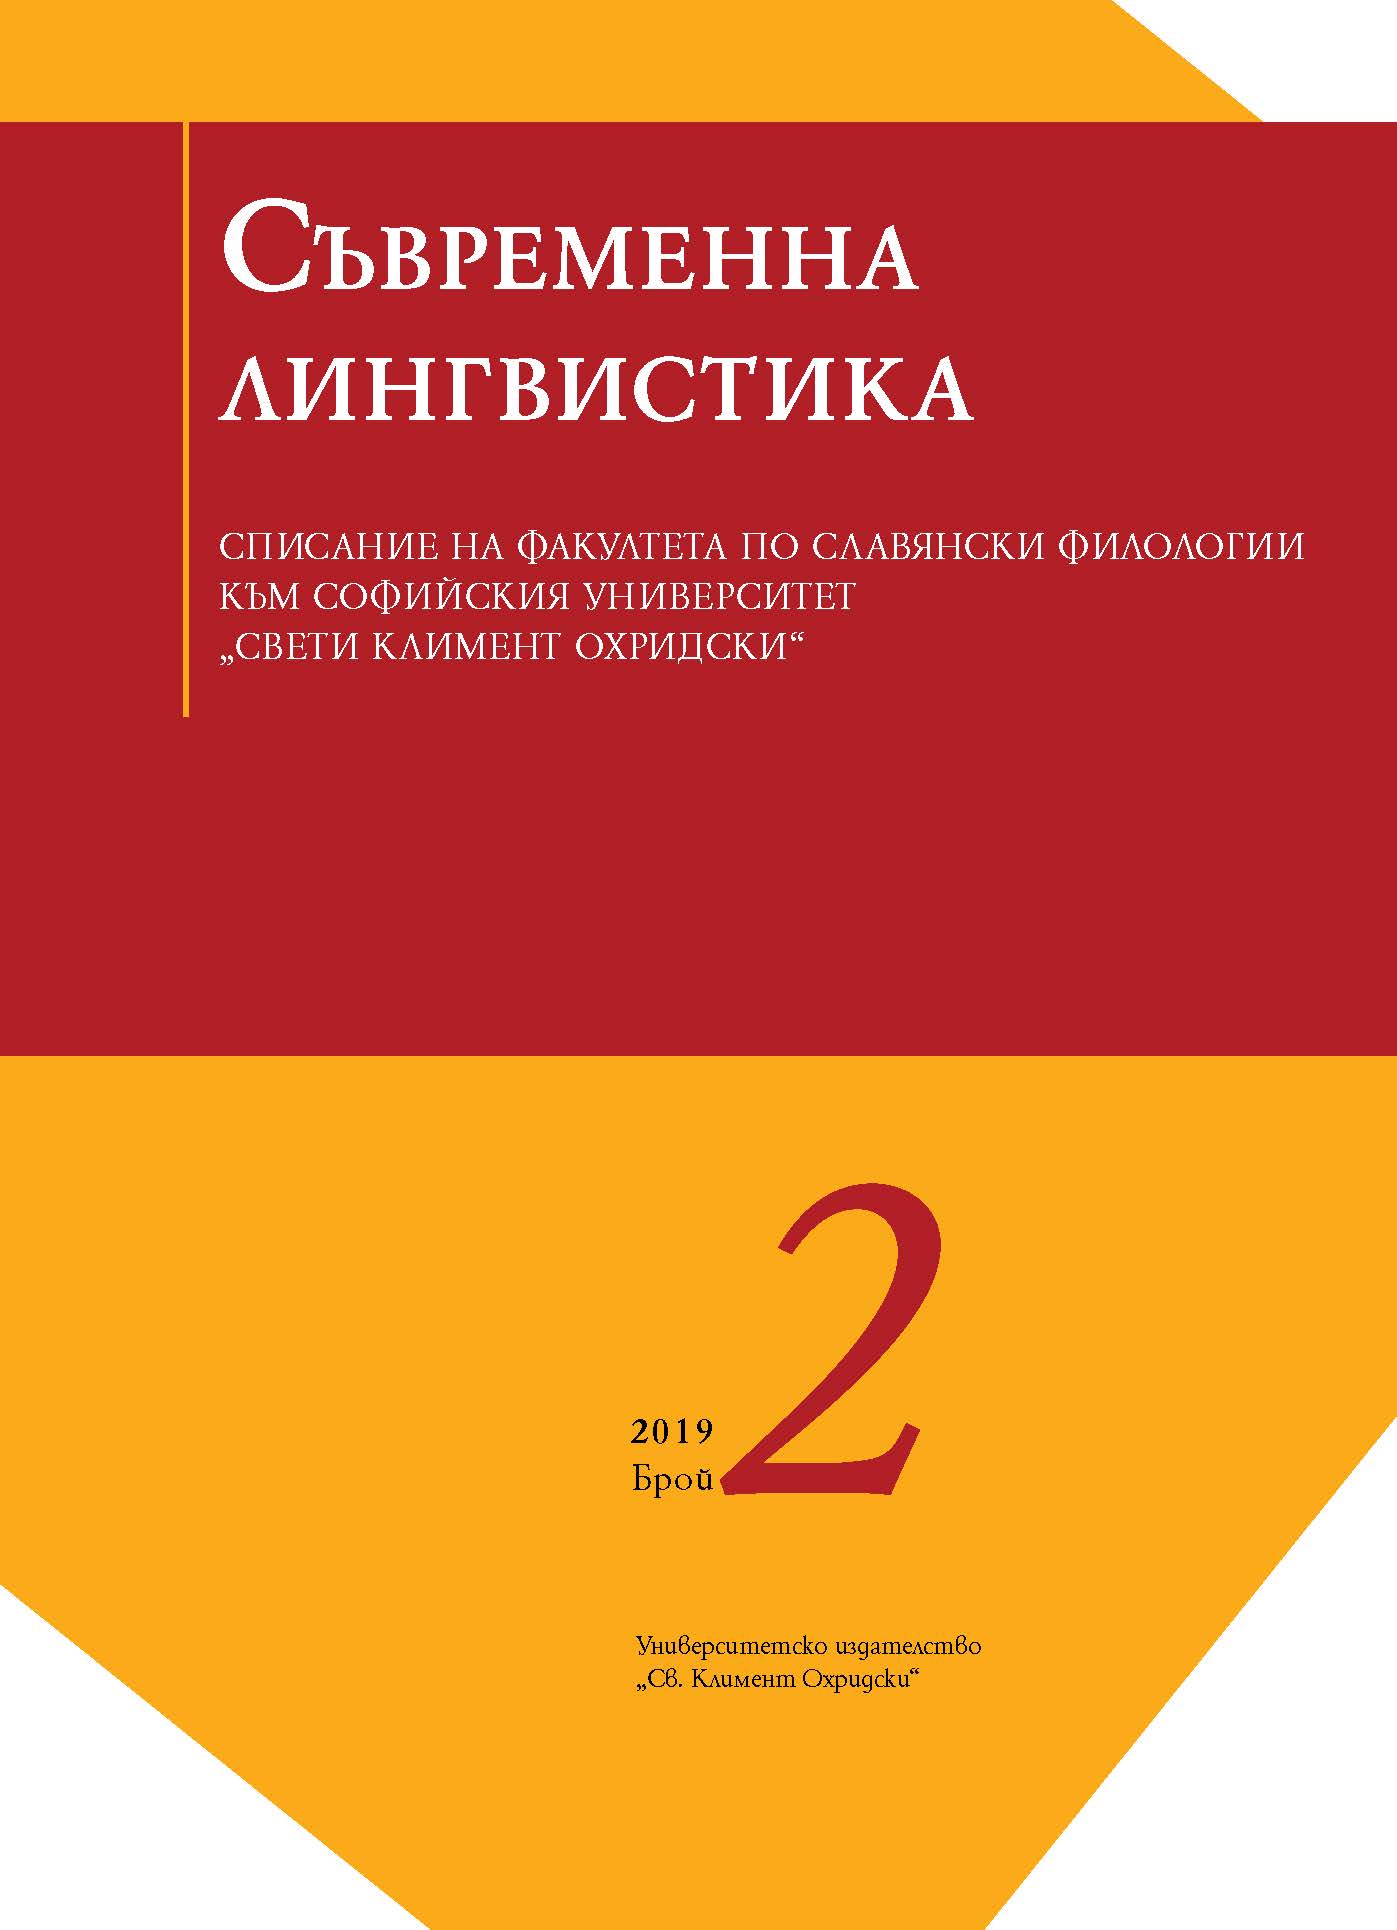 Sofia University Bulgarian Language Summer Seminar Cover Image